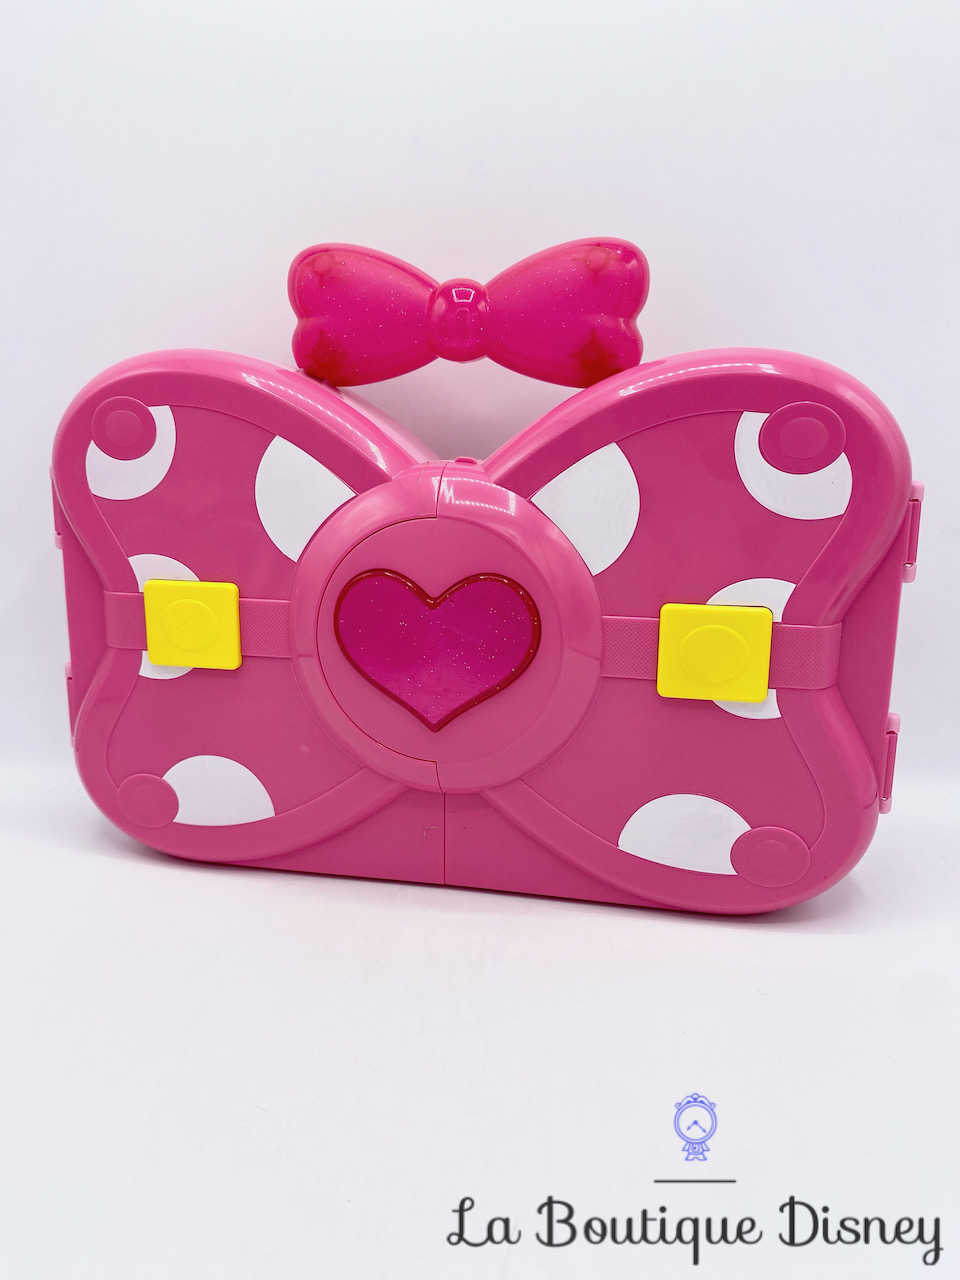 jouet-dressing-popstar-portable-minnie-mouse-disney-imc-toys-figurine-habiller-vetements-8